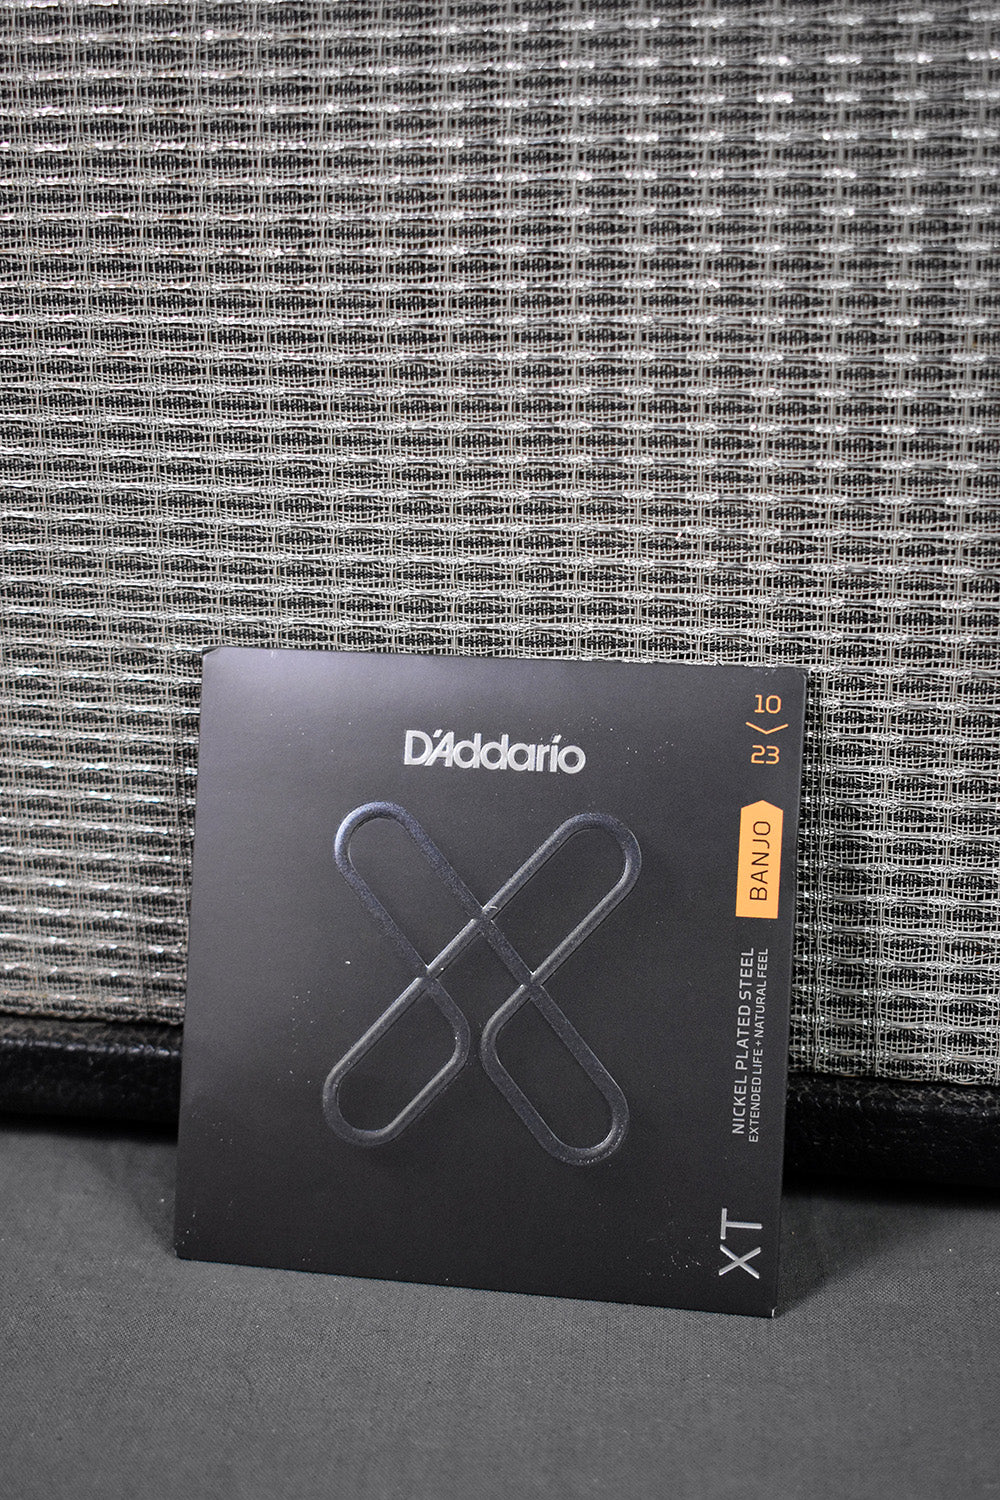 D'Addario XT Nickel-Plated Banjo Strings